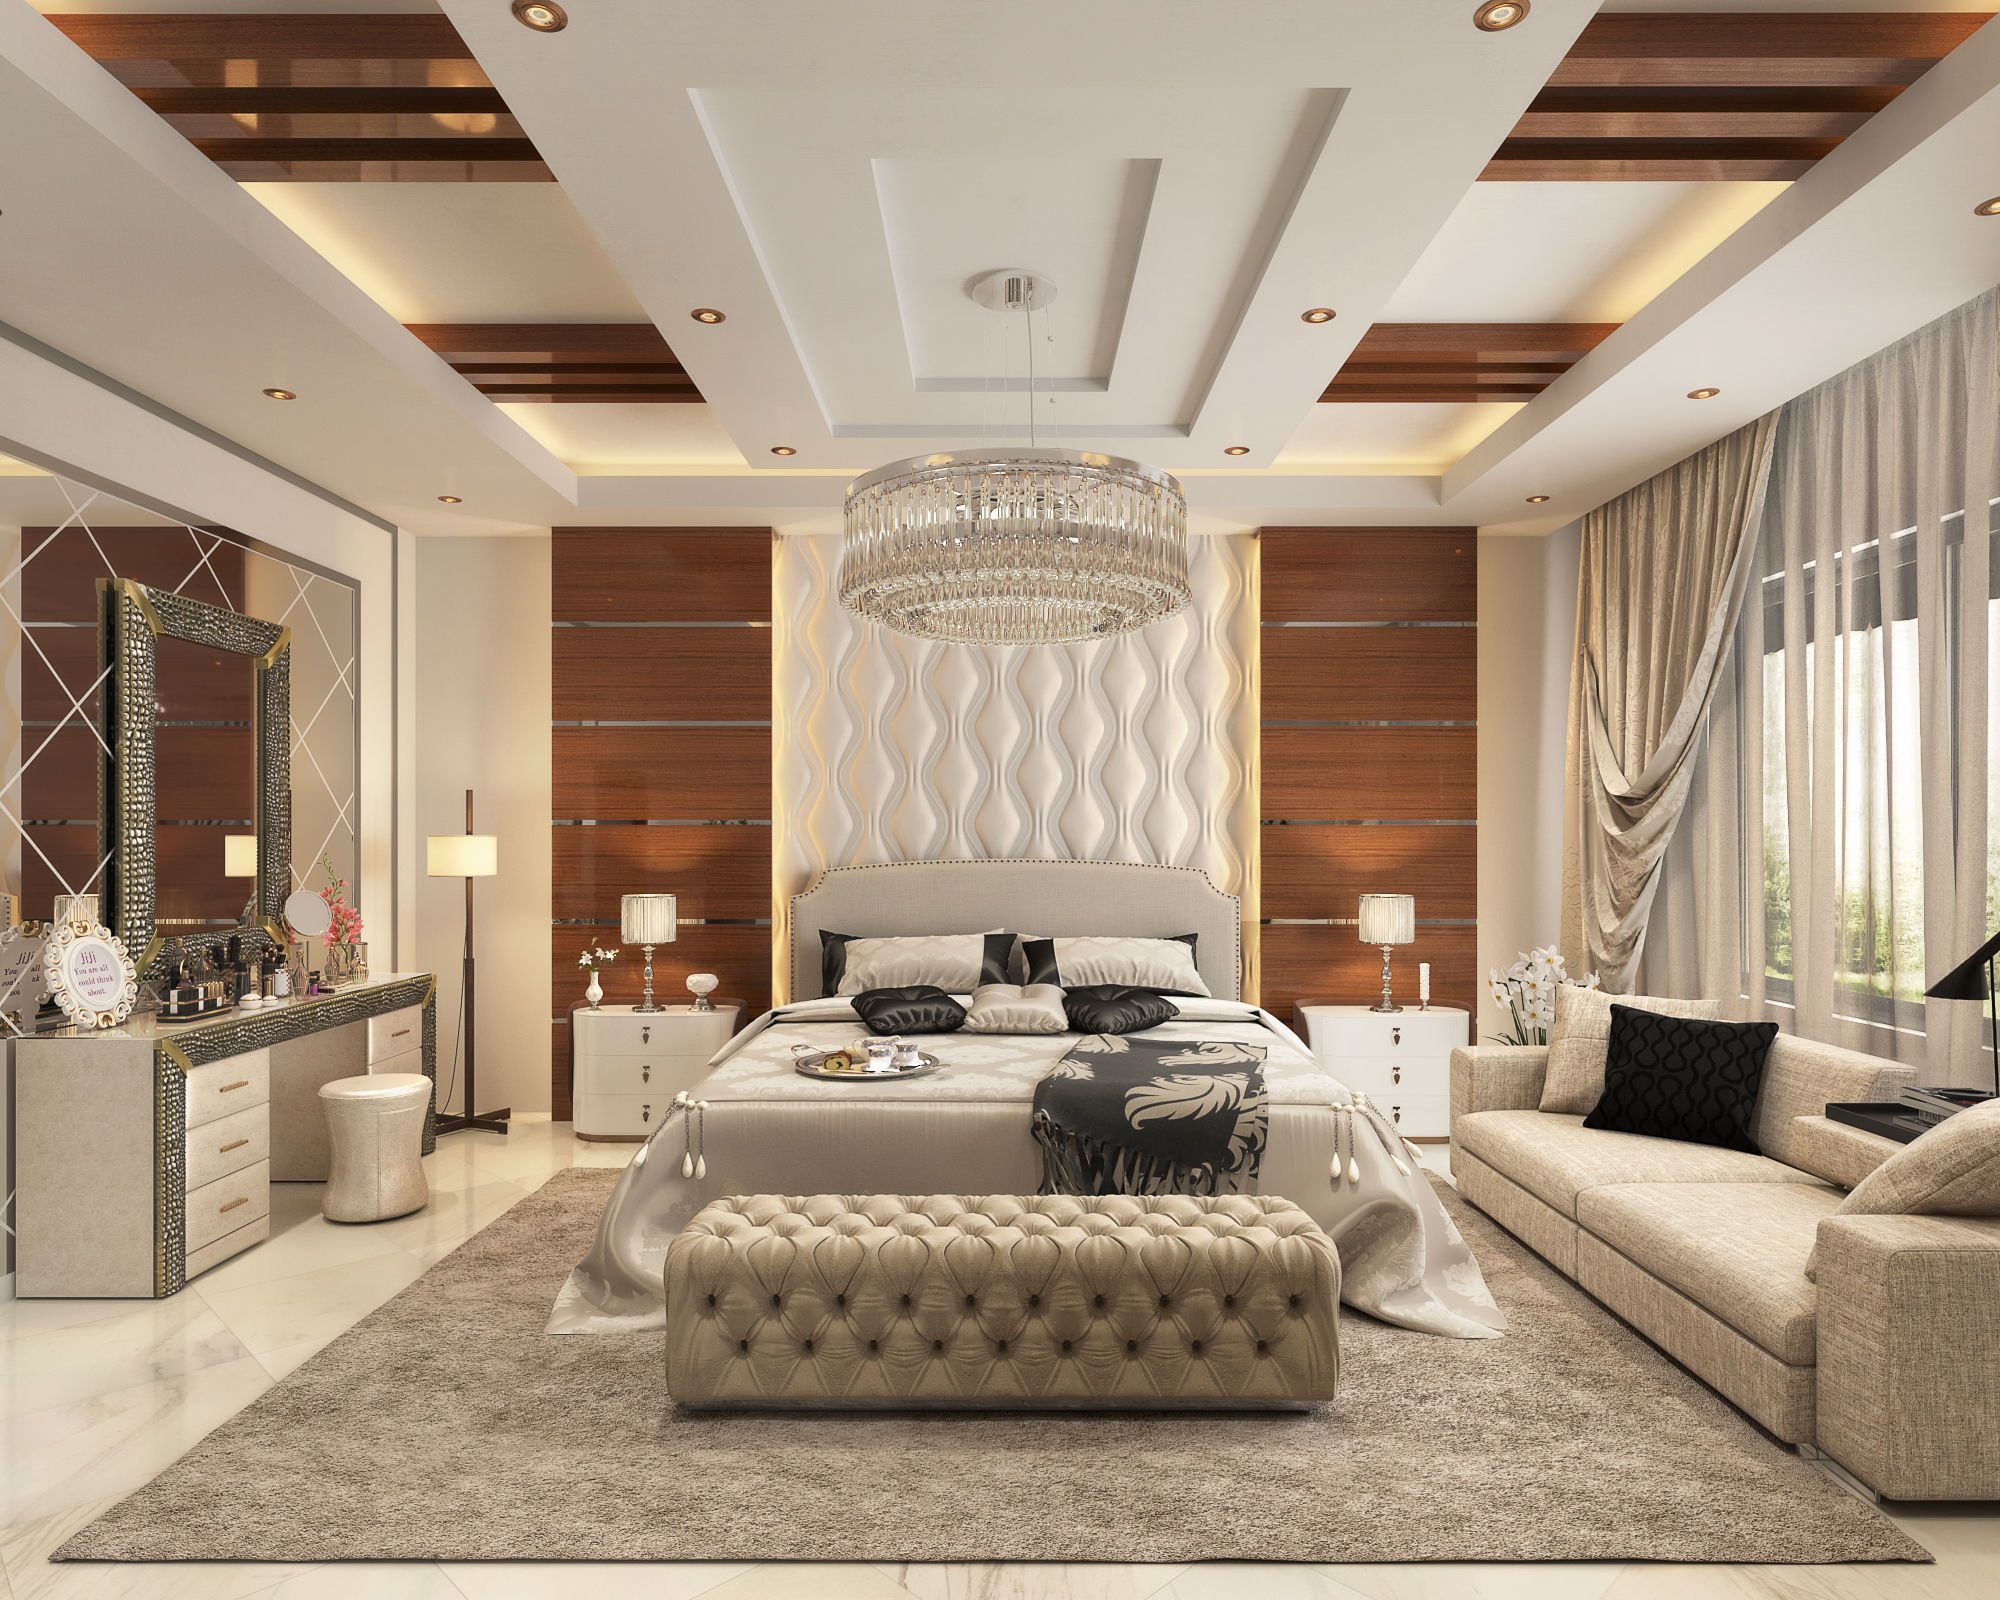 Interior design for bedrooms